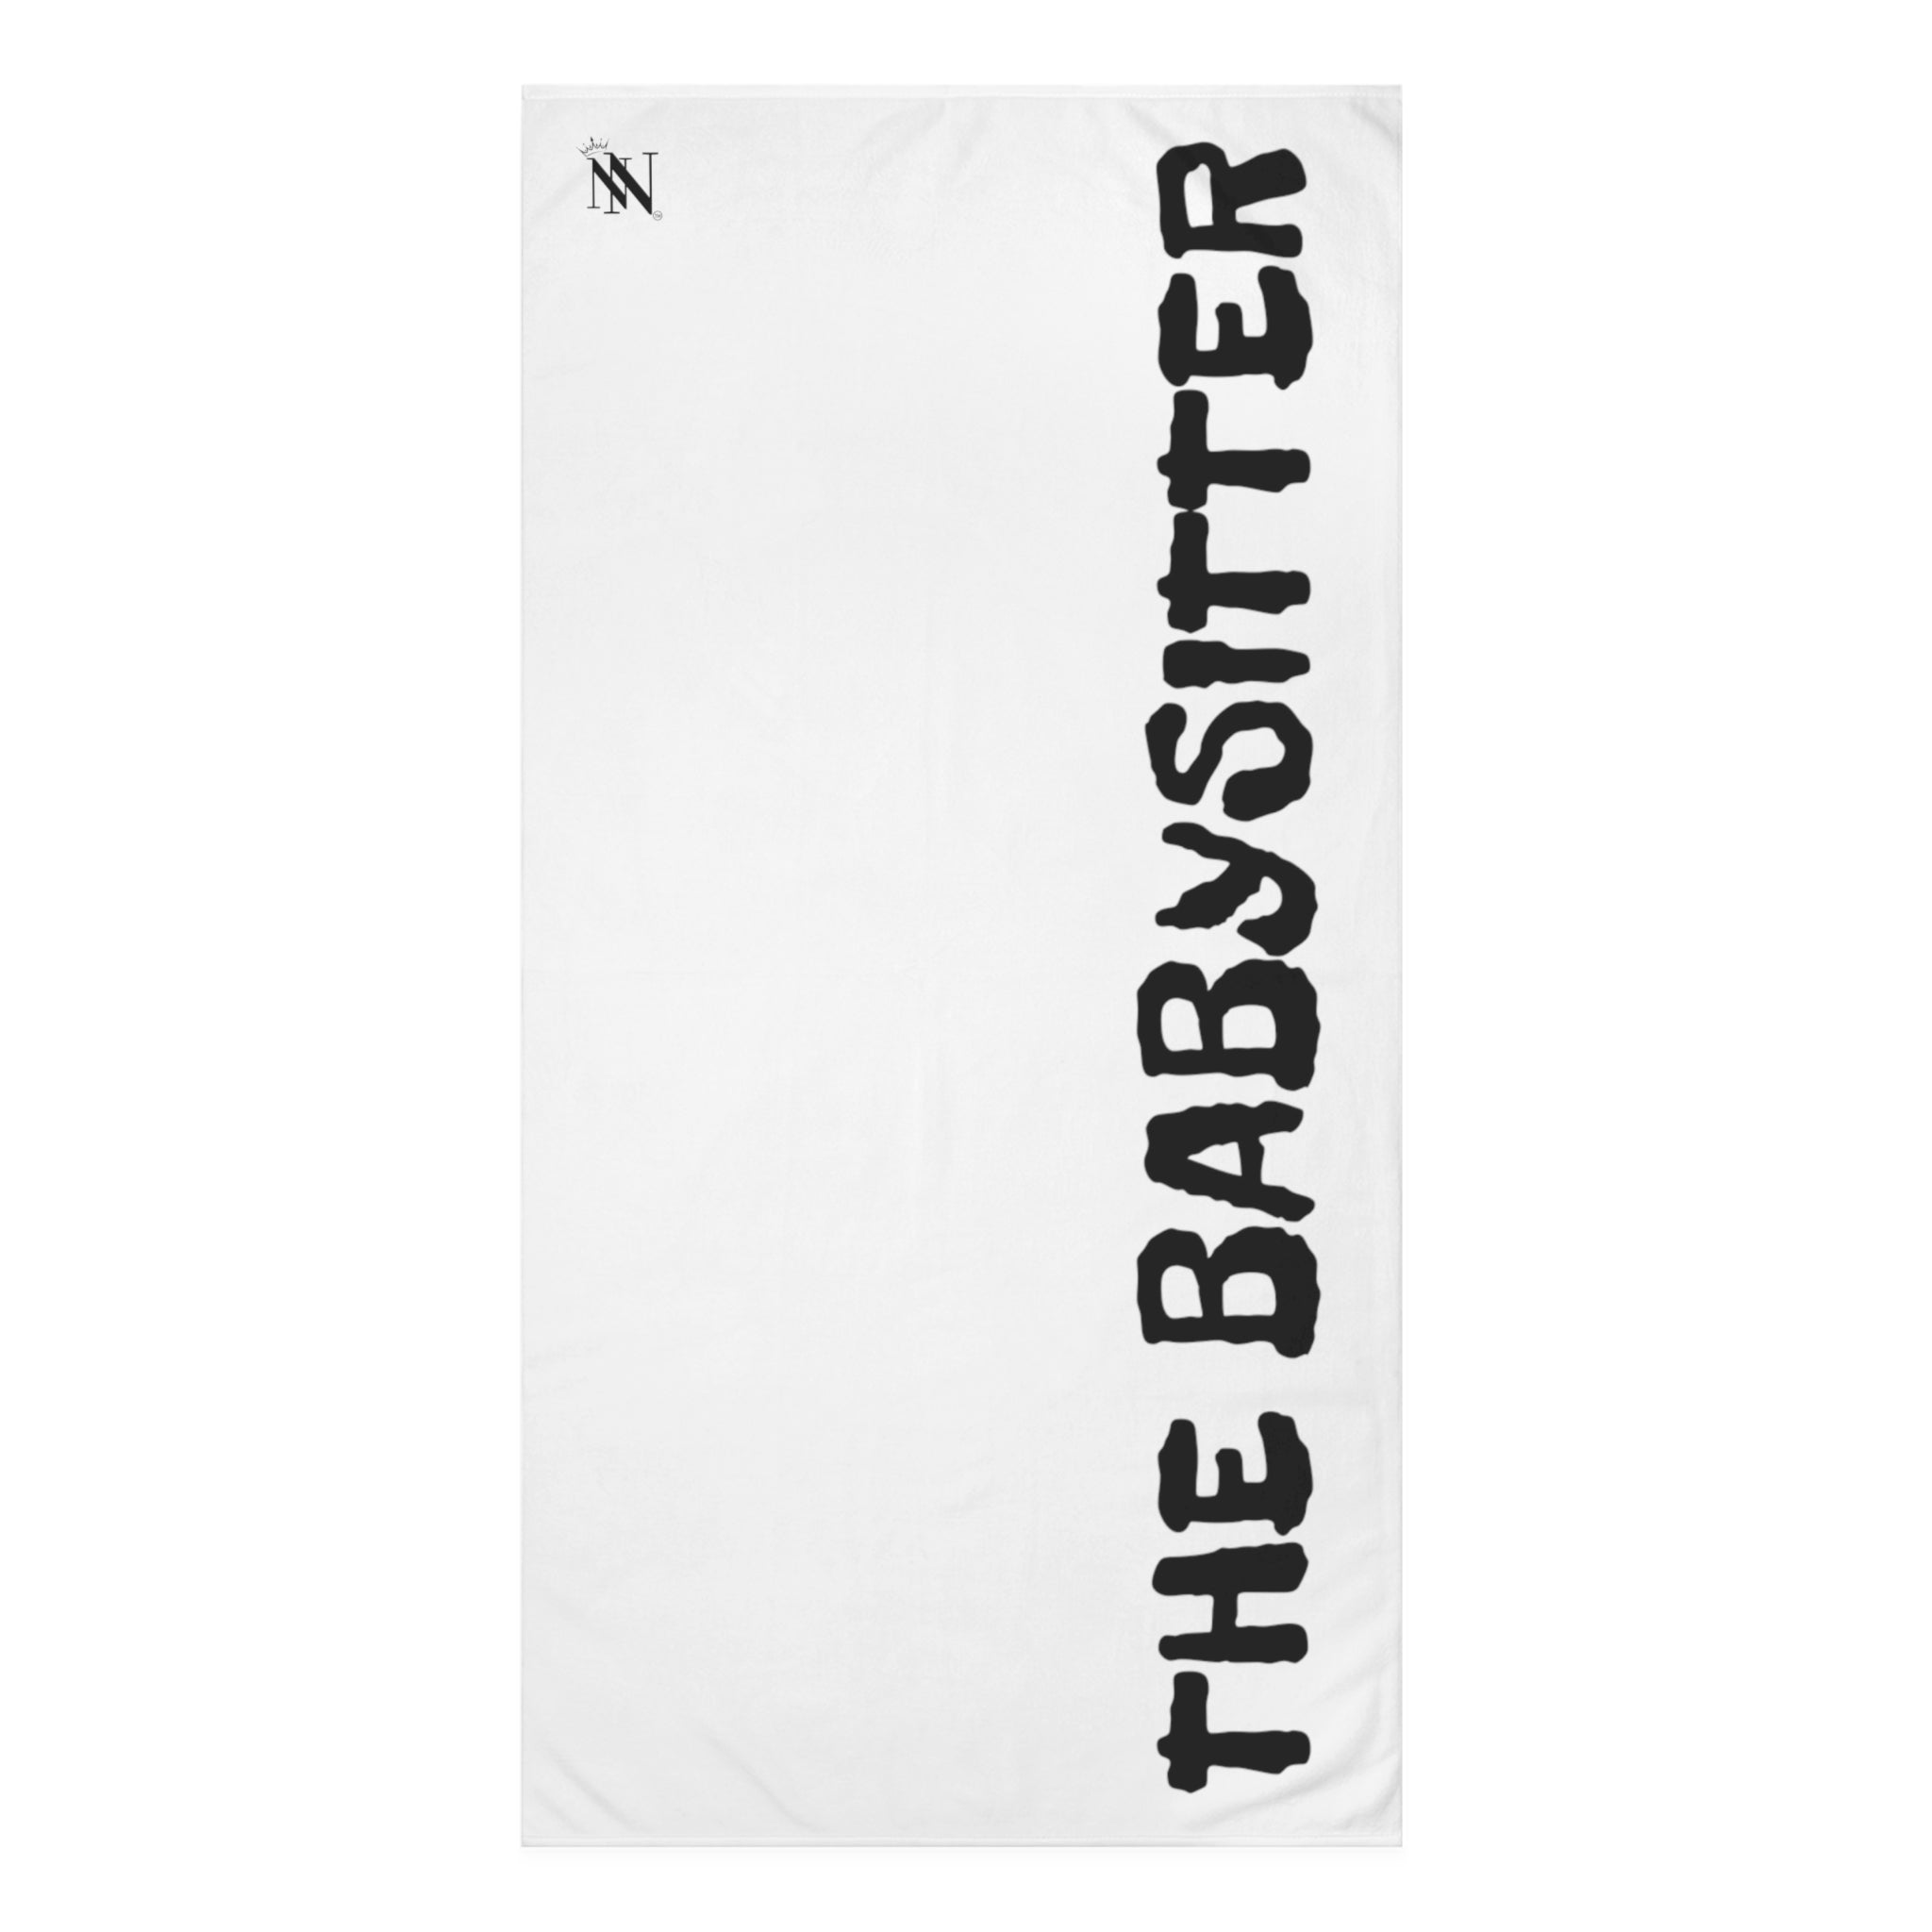 The babysitter sex towel